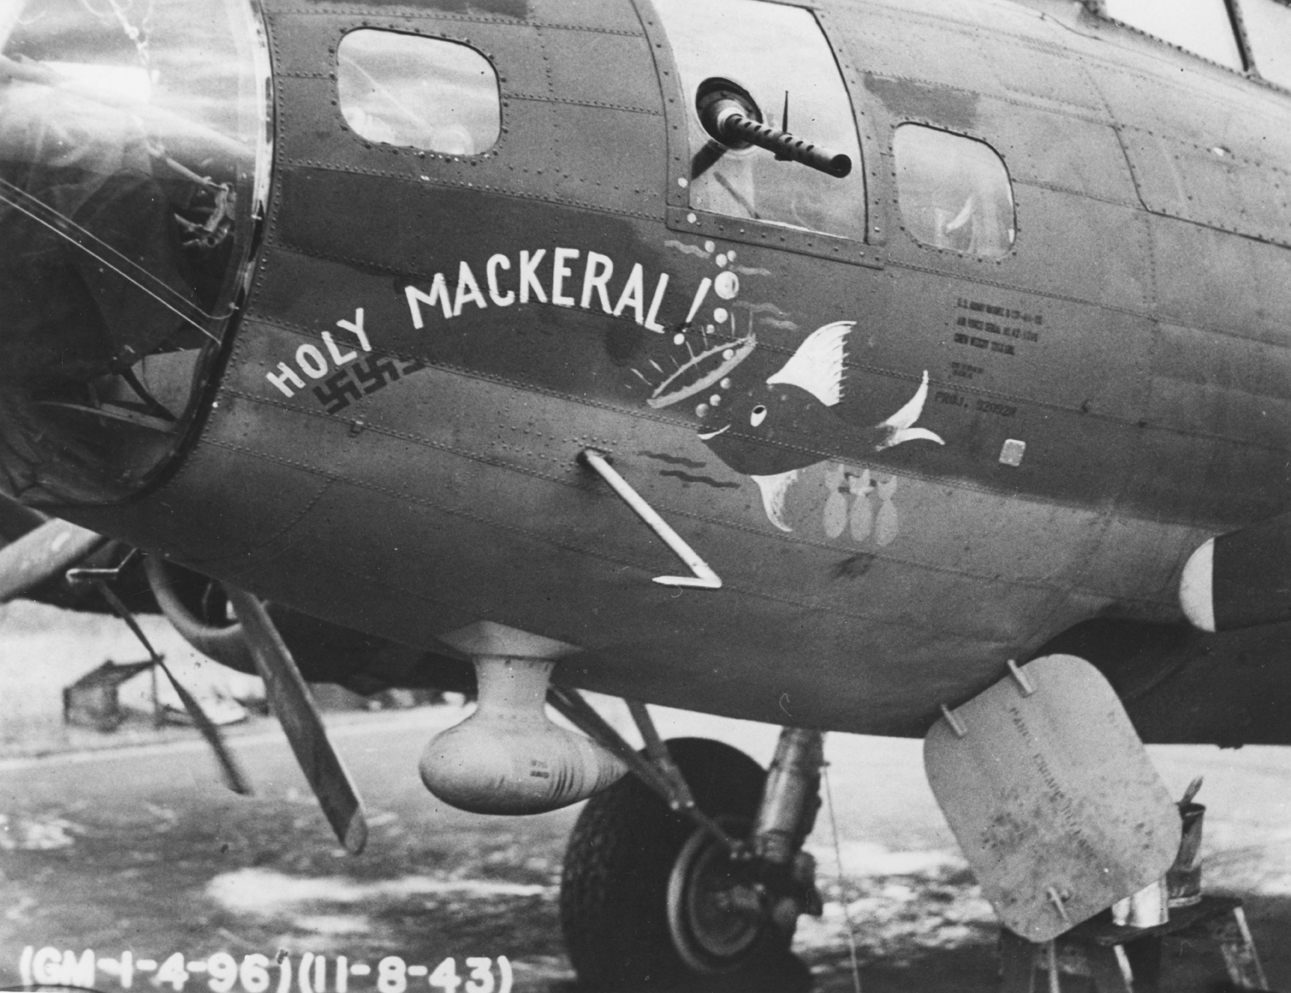 B-17 #42-3265 / Holy Mackeral!